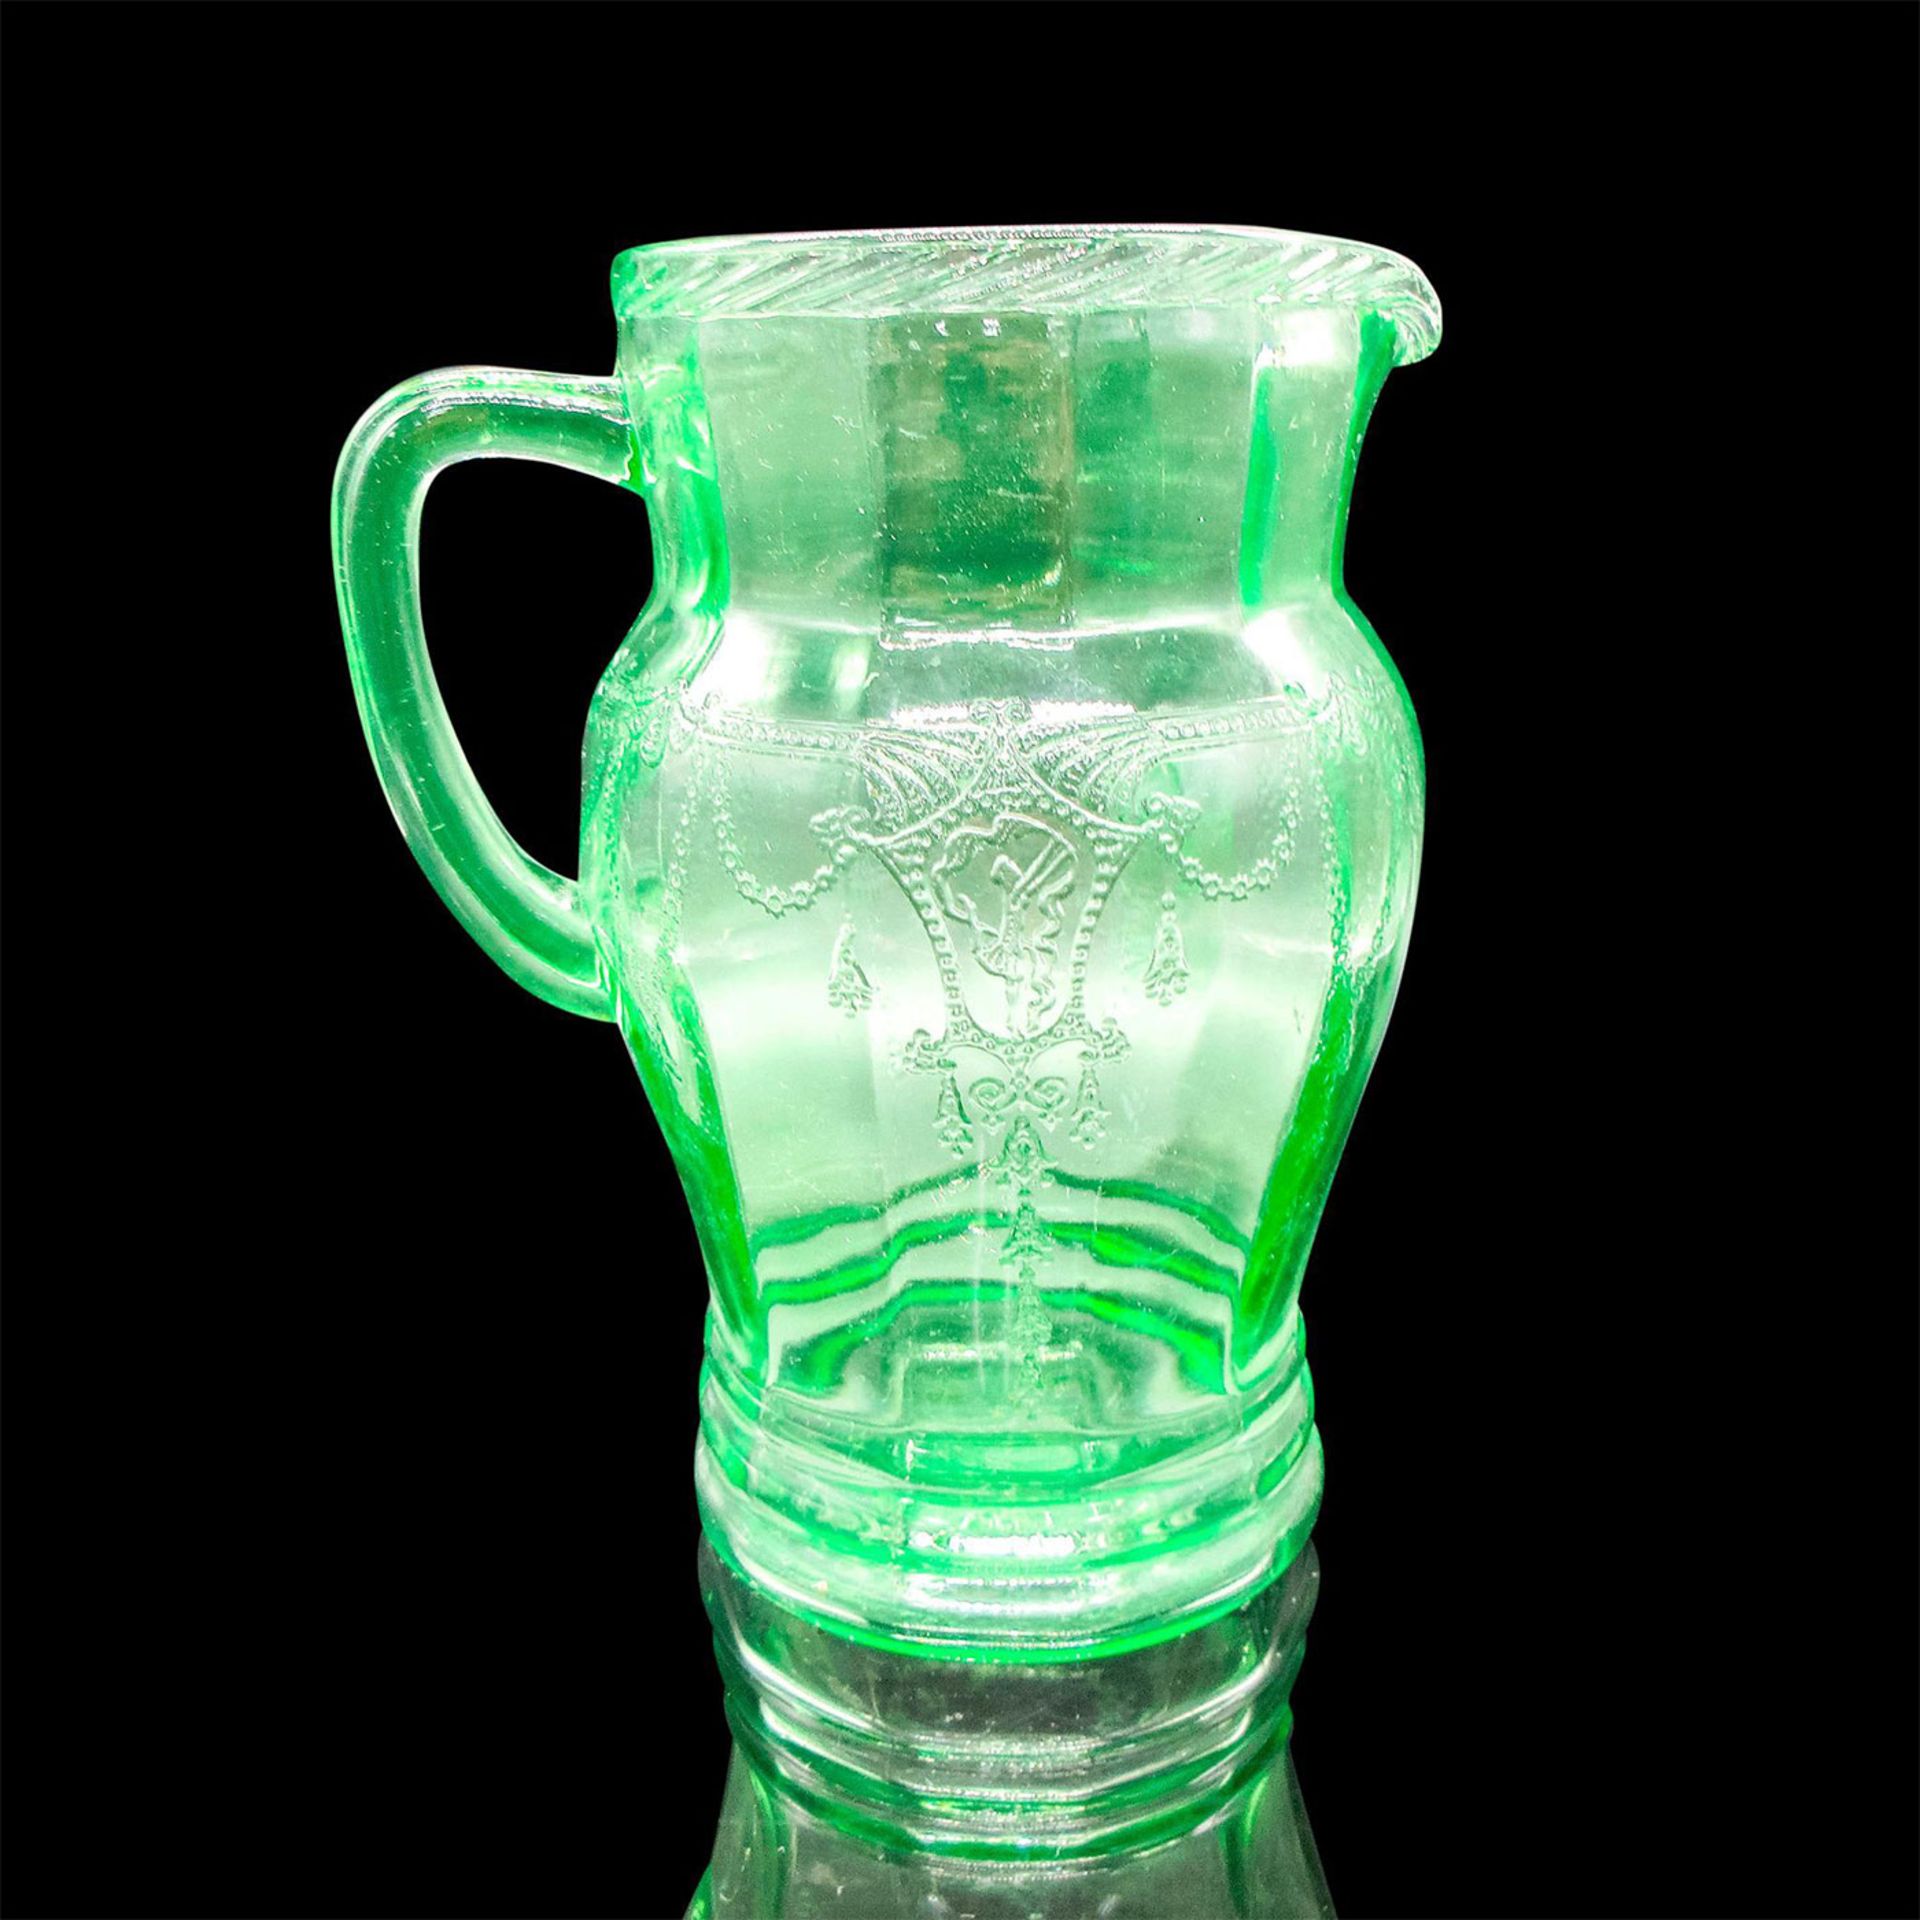 Vintage Green Depression Glass Pitcher - Image 3 of 3